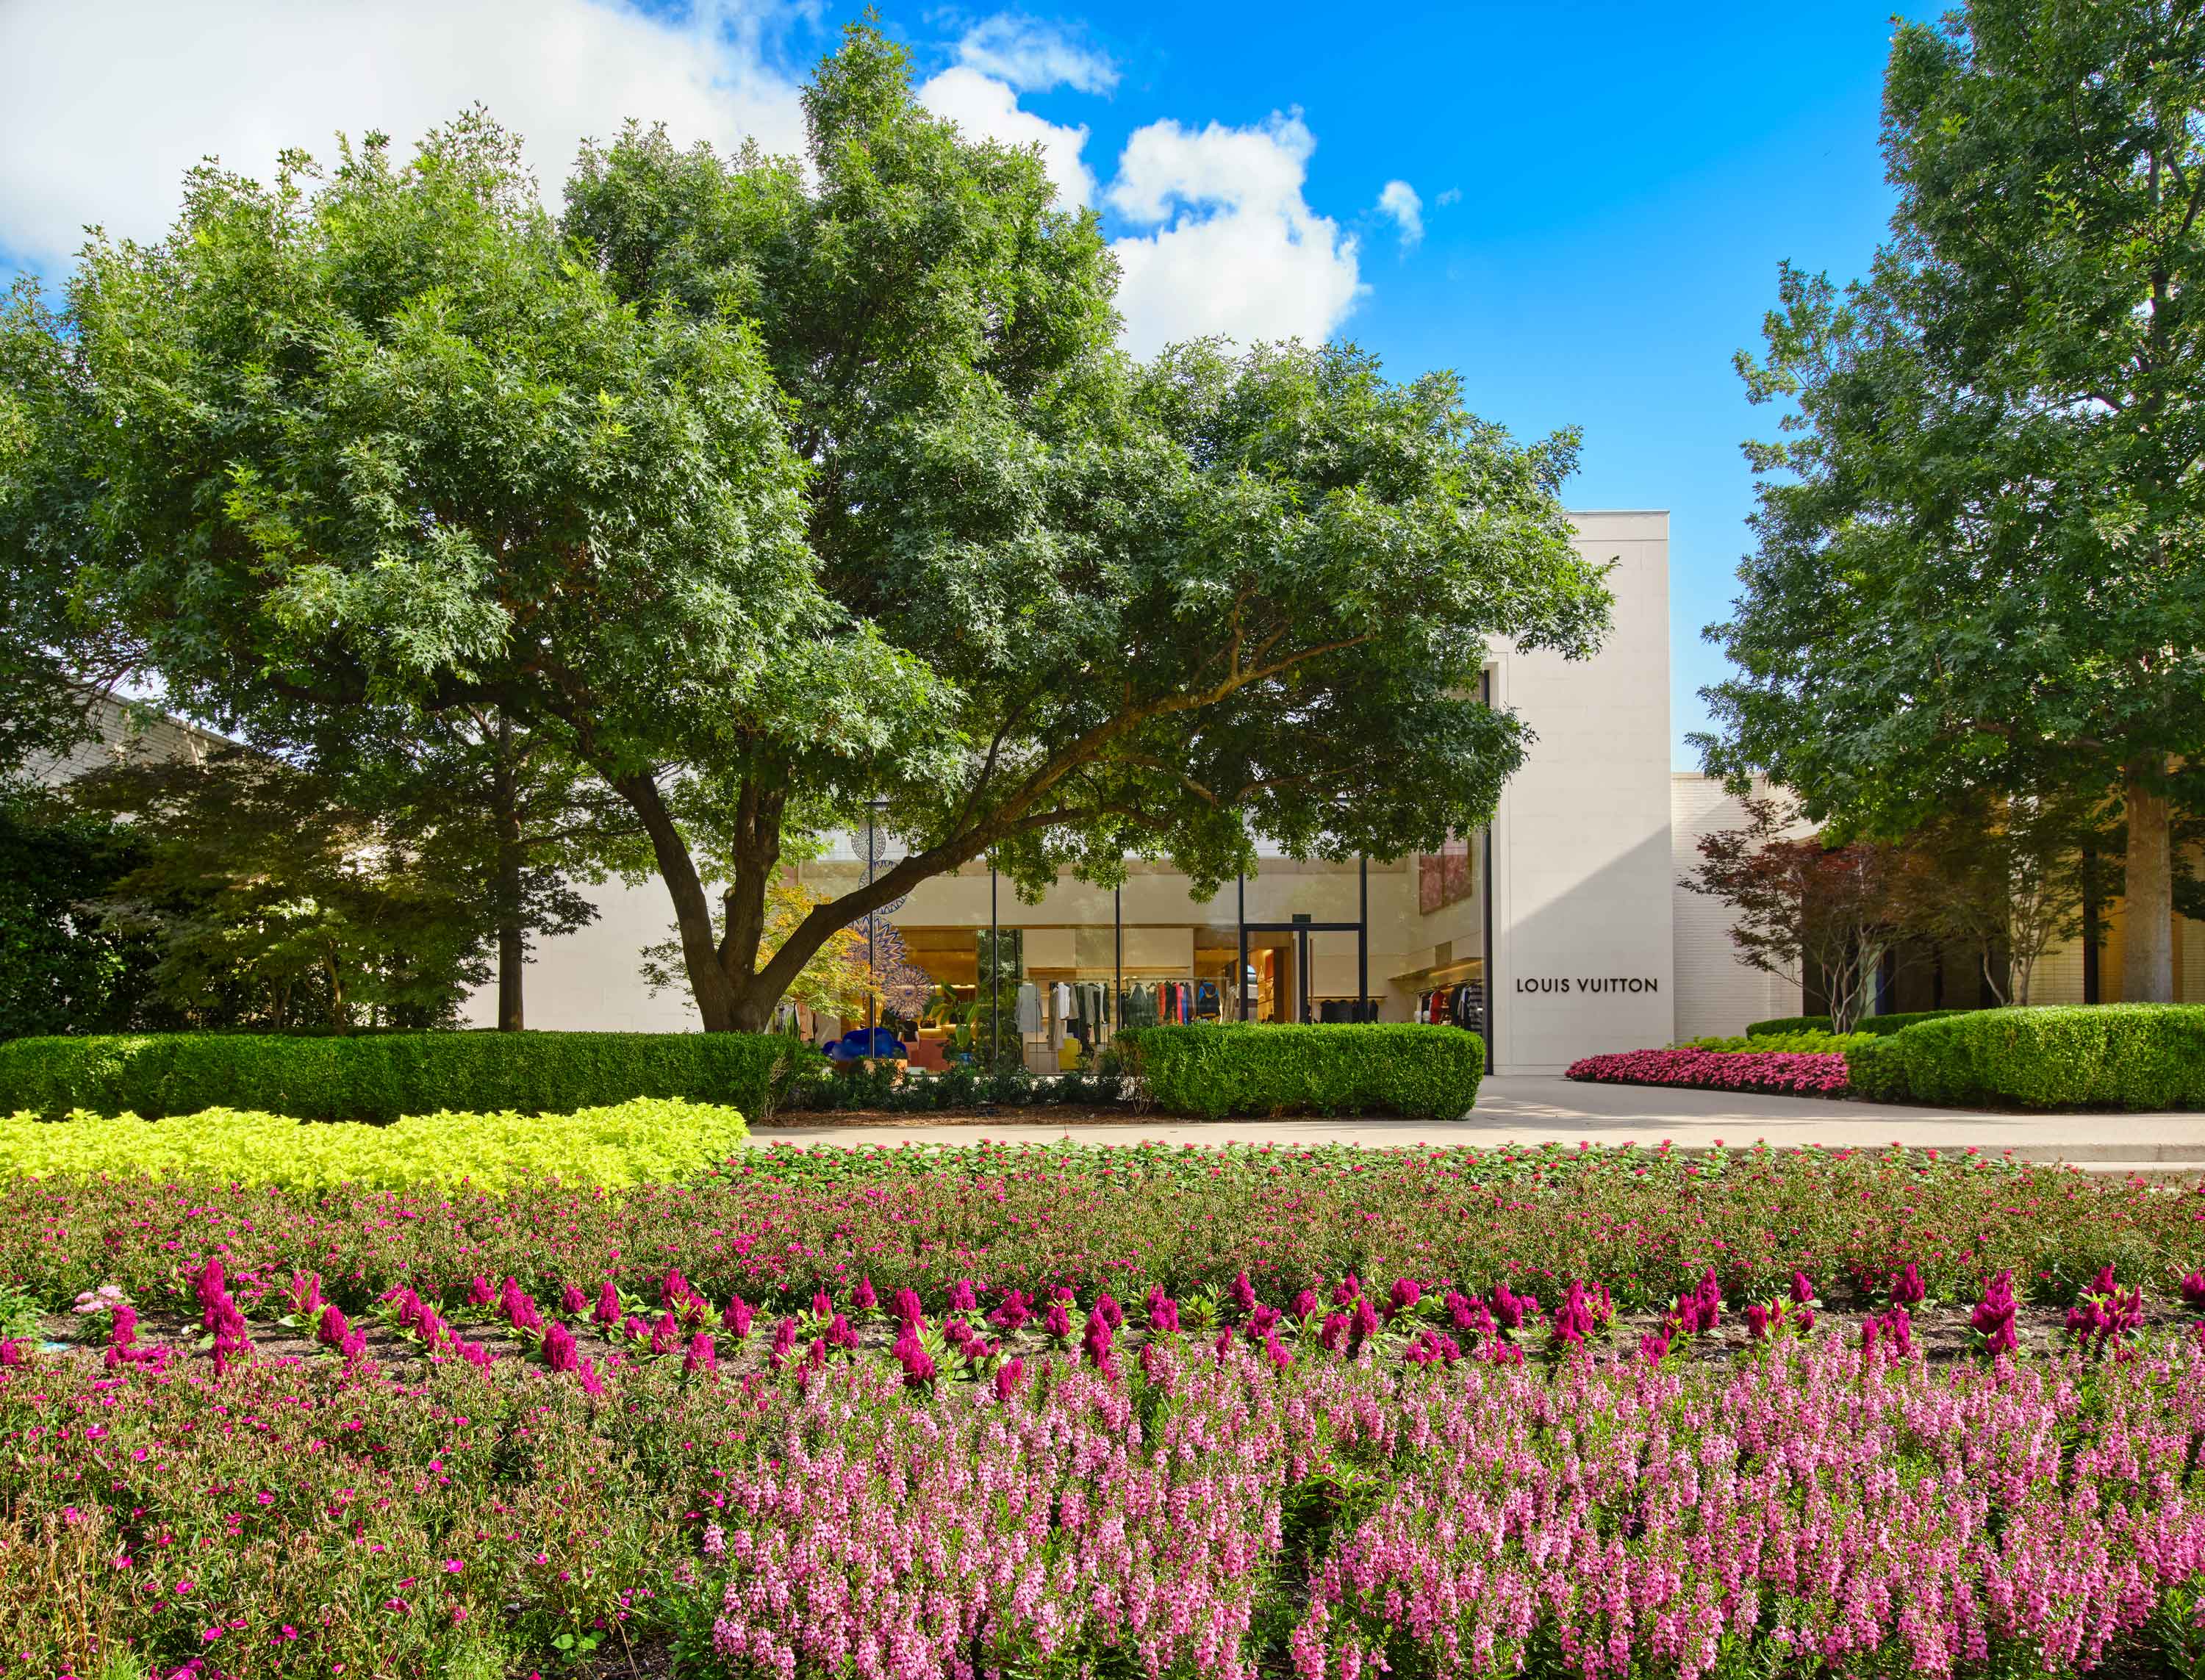 CenterPark at NorthPark Center (Dallas TX). Terraced flower beds